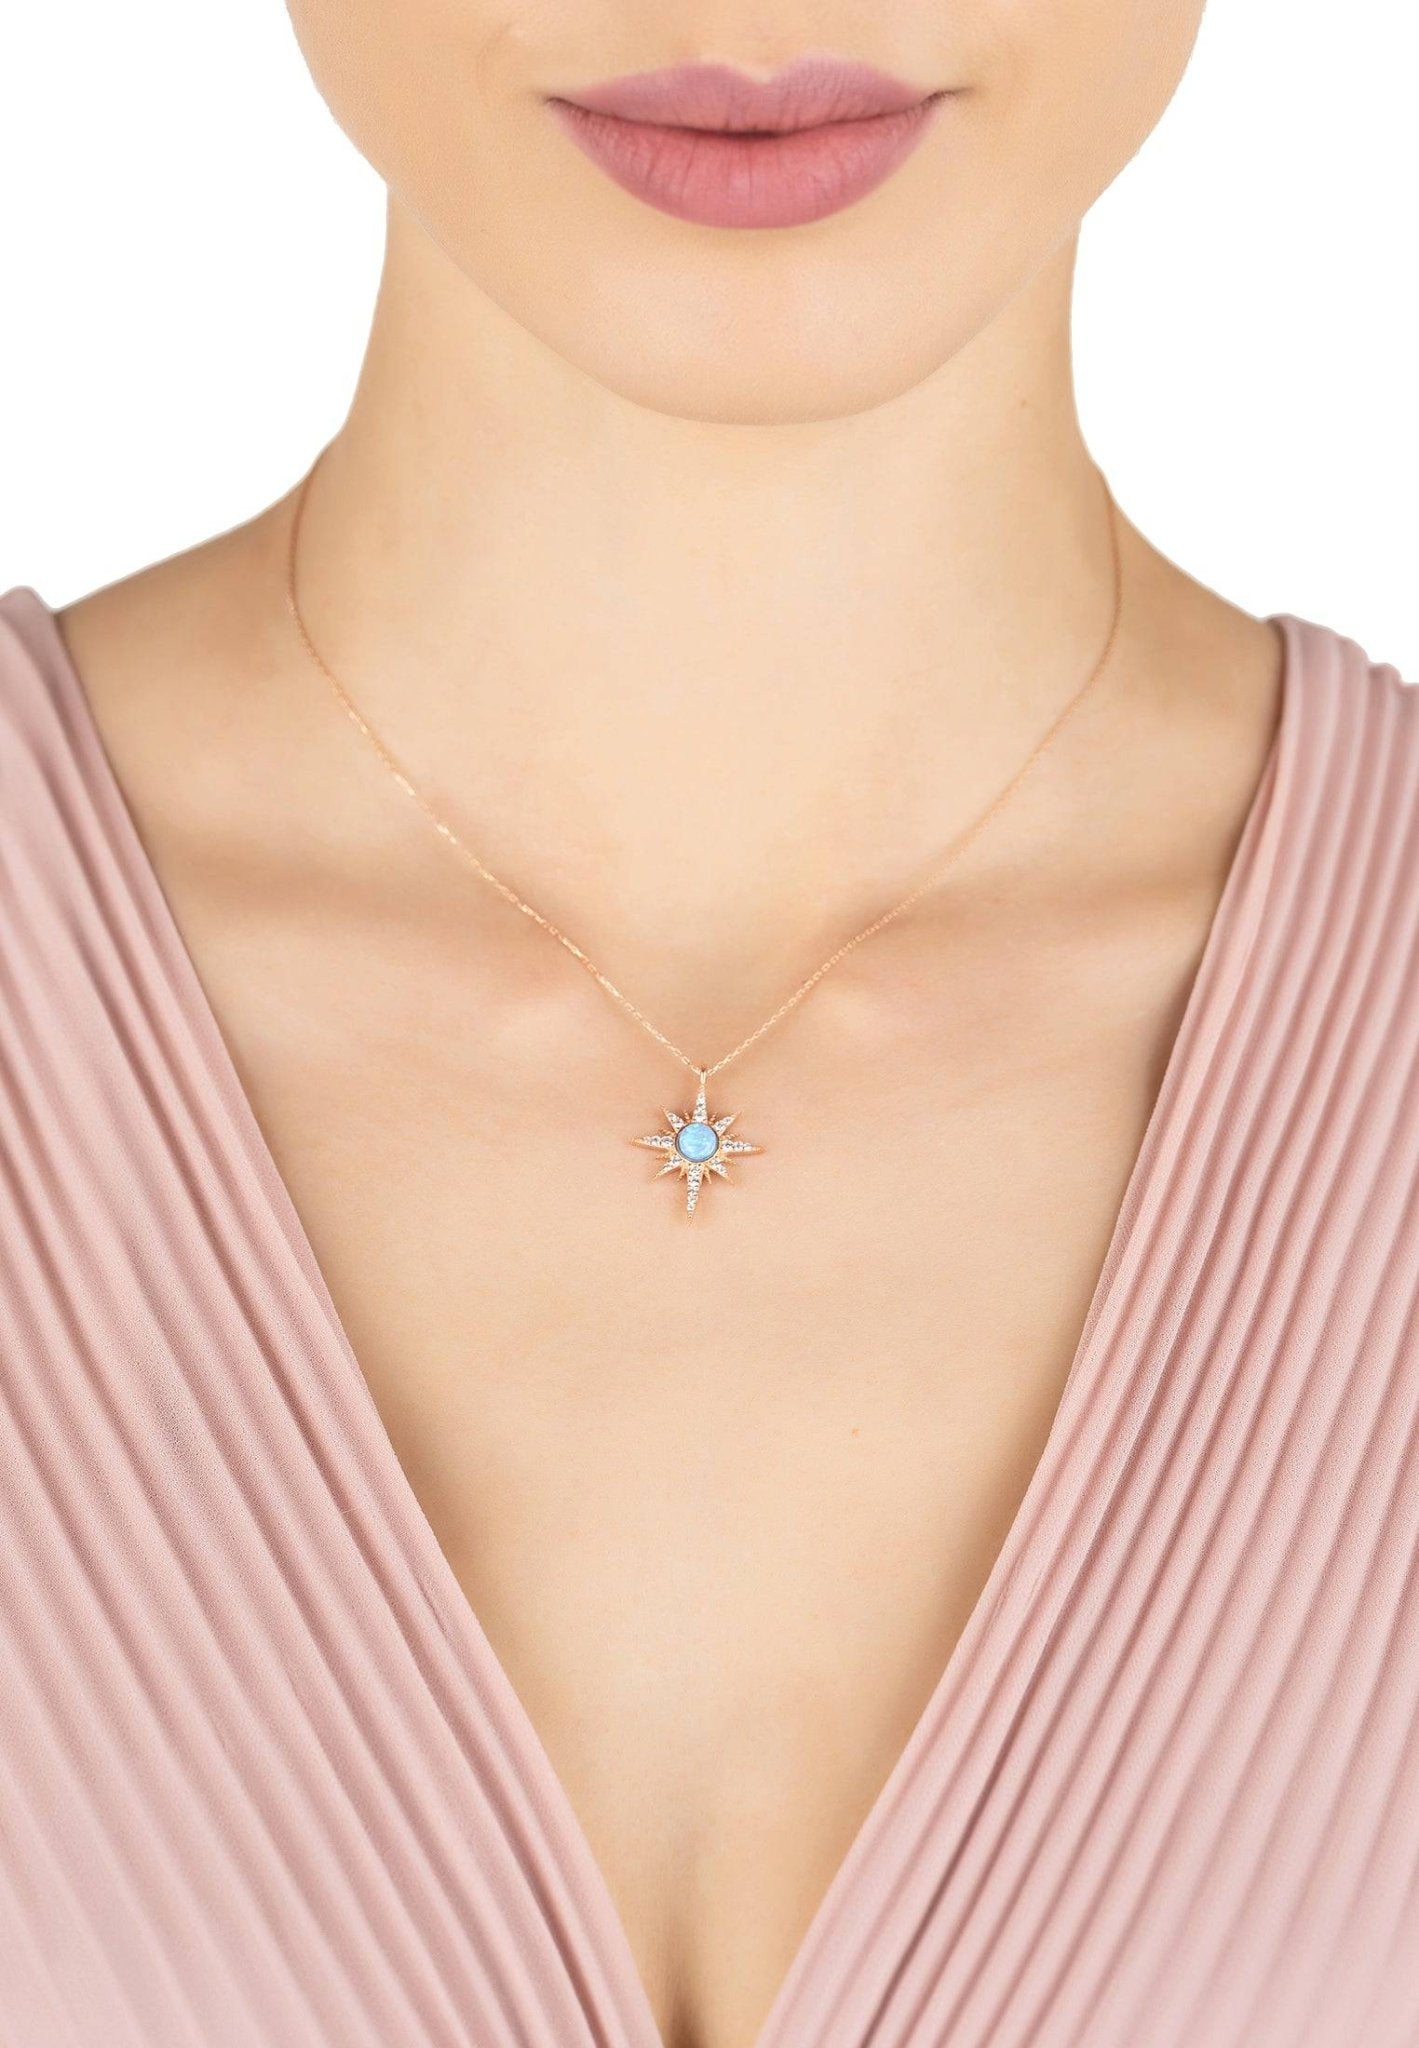 Apollo Opalite Blue Sunburst Necklace Rosegold - LATELITA Necklaces